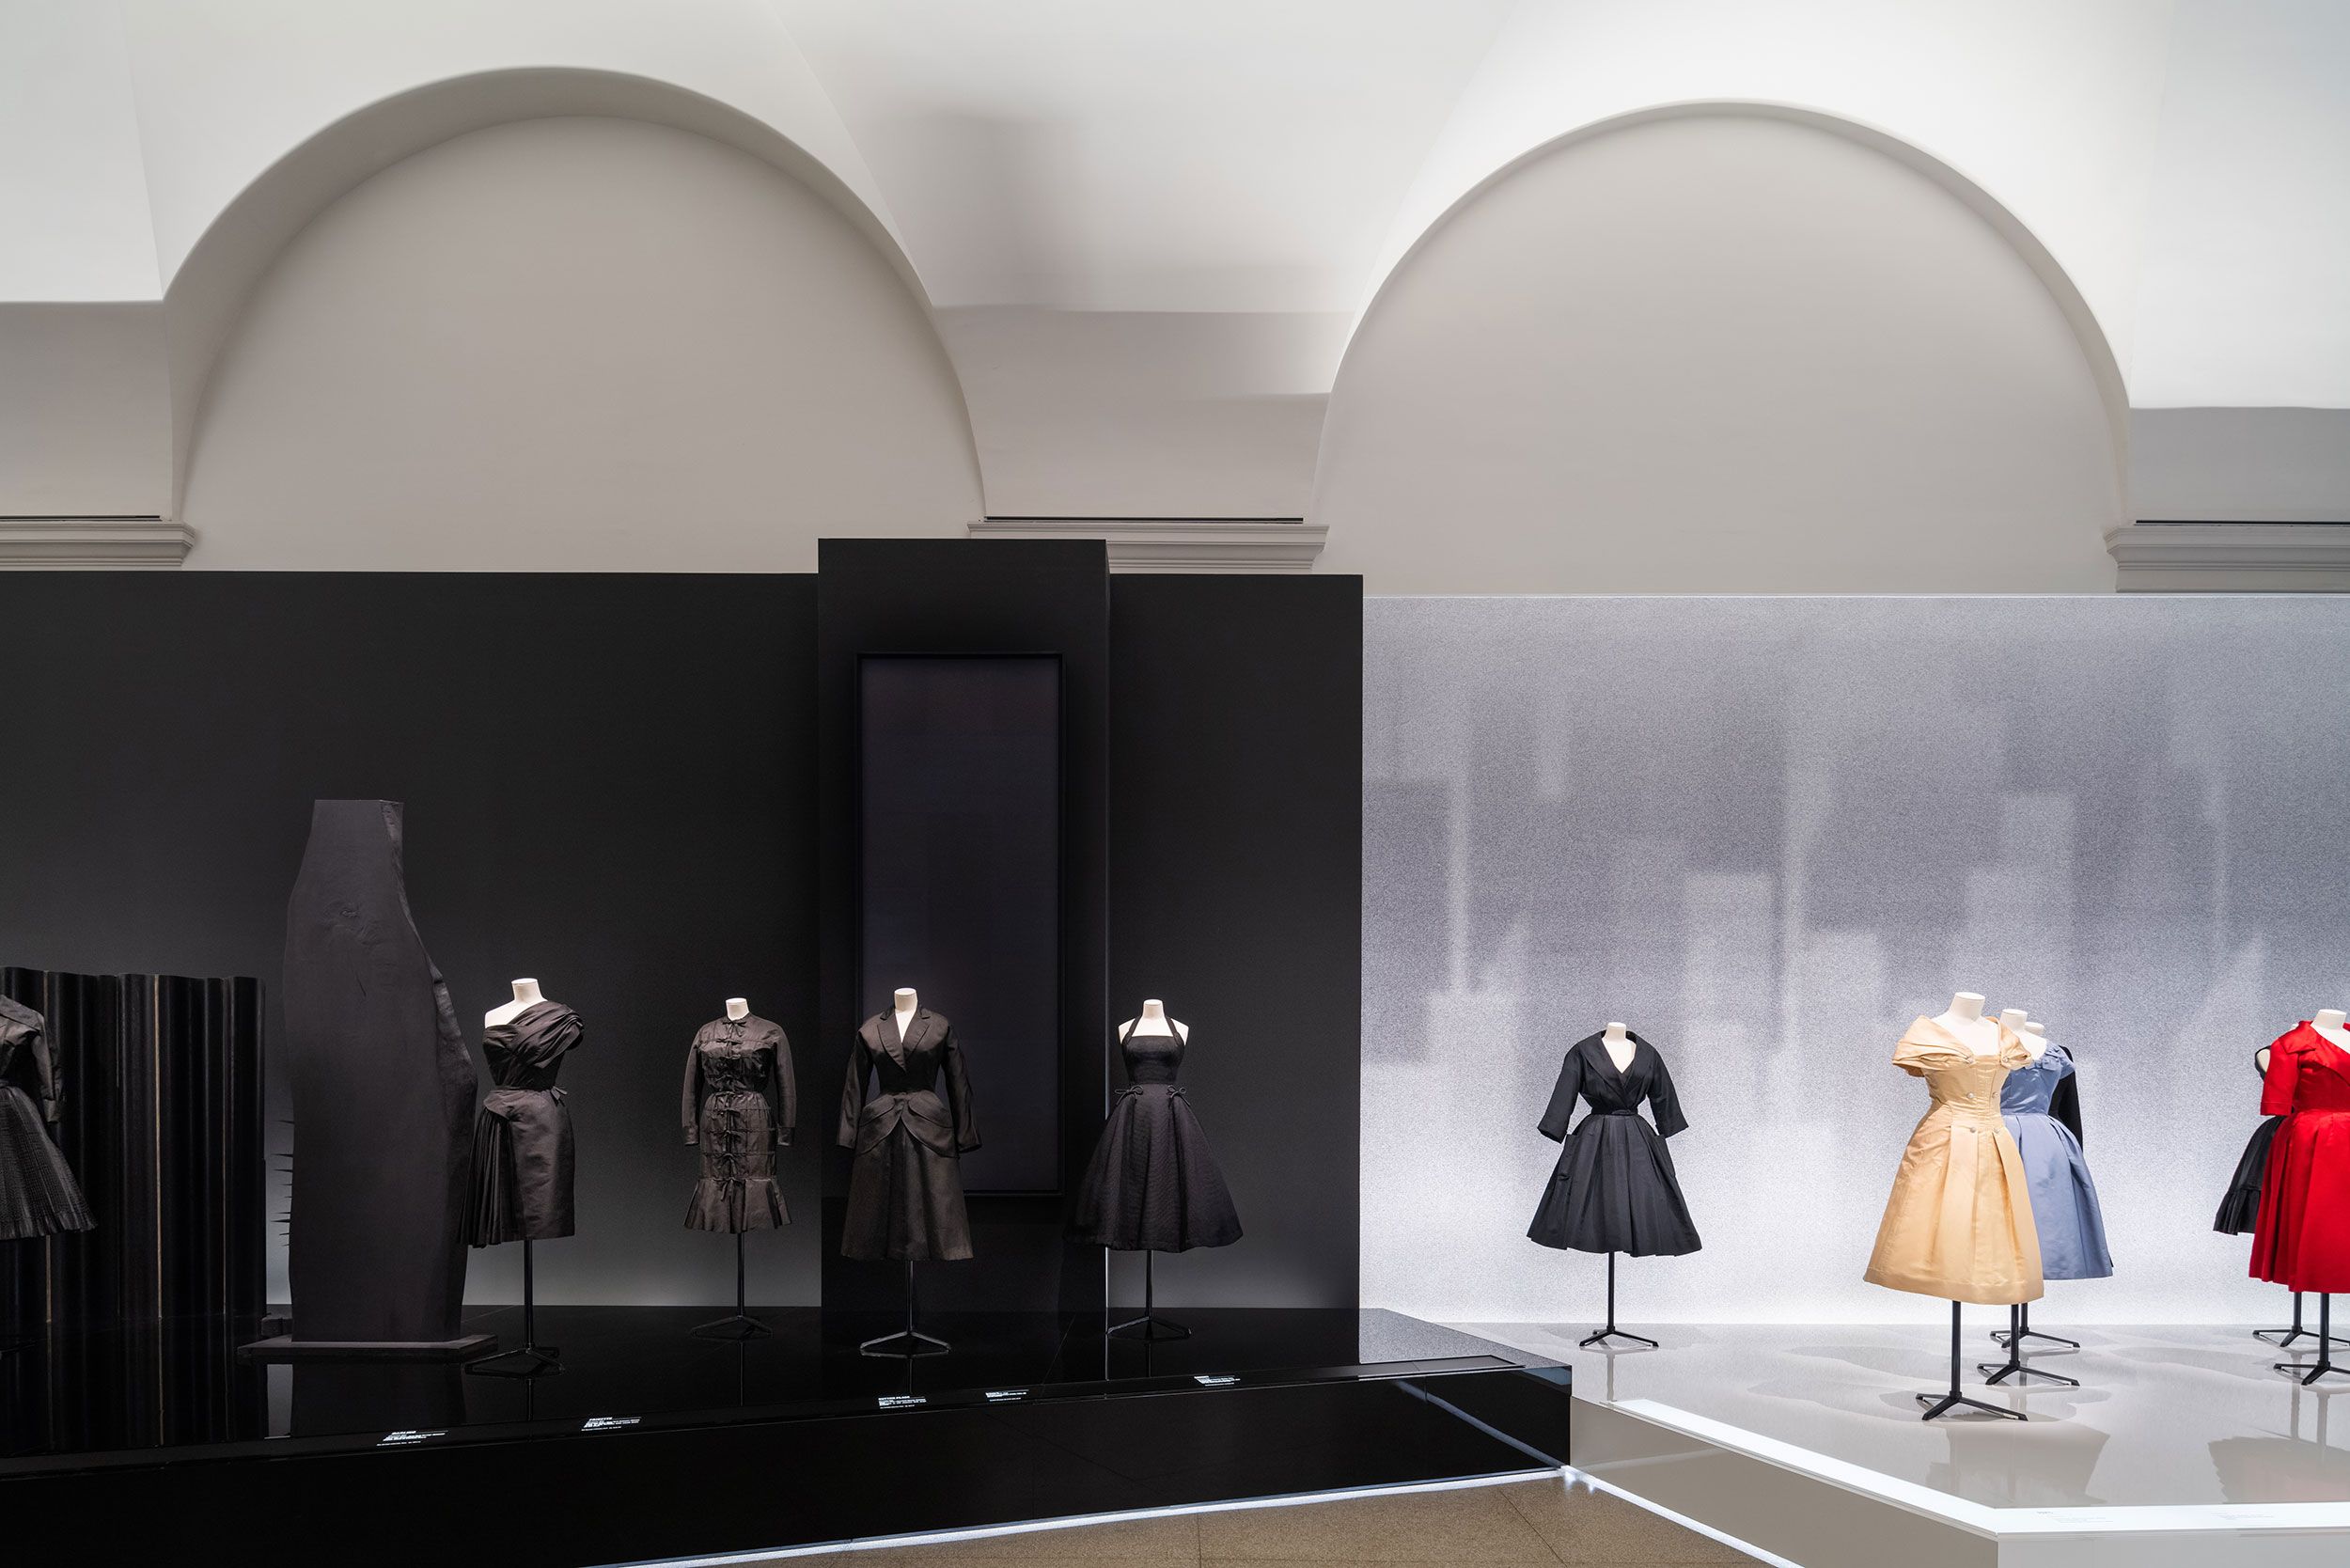 Christian Dior: Designer of Dreams” Exhibit Is Headed To Brooklyn!